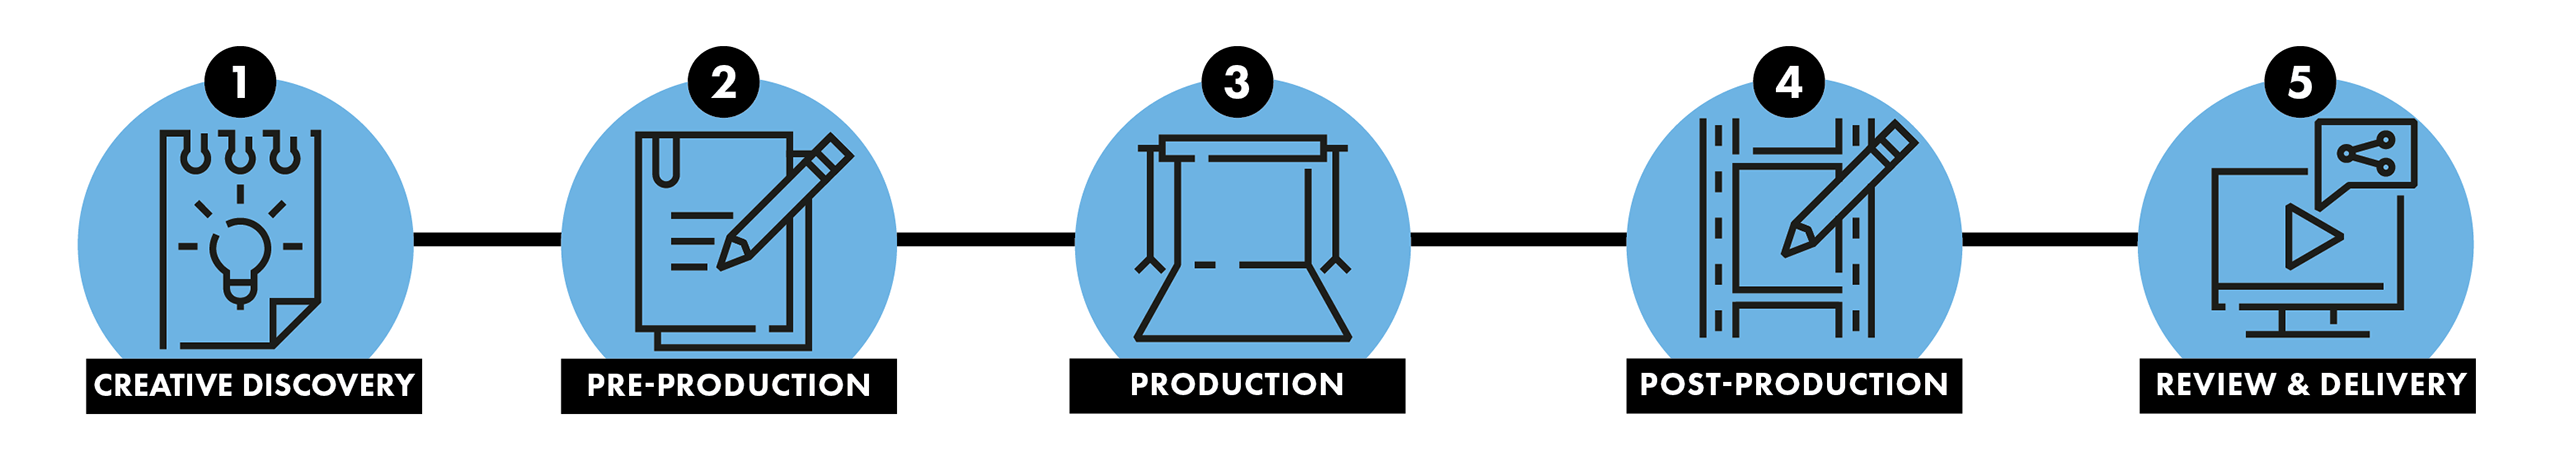 video production process diagram